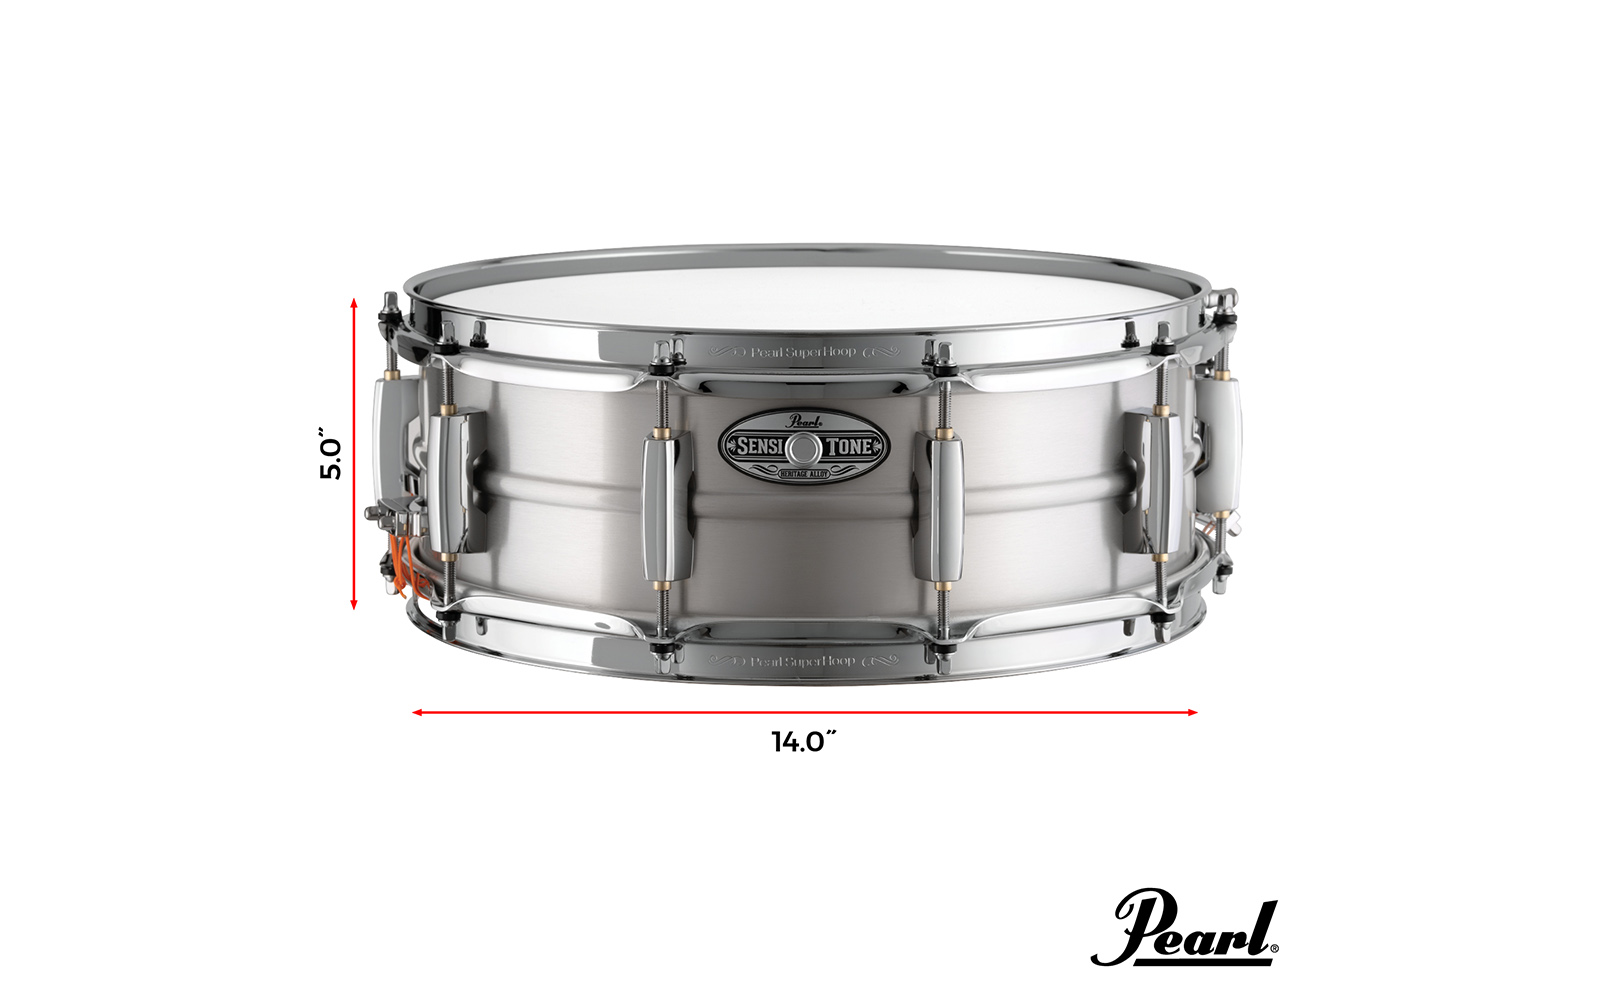 Heritage Alloy Aluminum | パール楽器【公式サイト】Pearl Drums